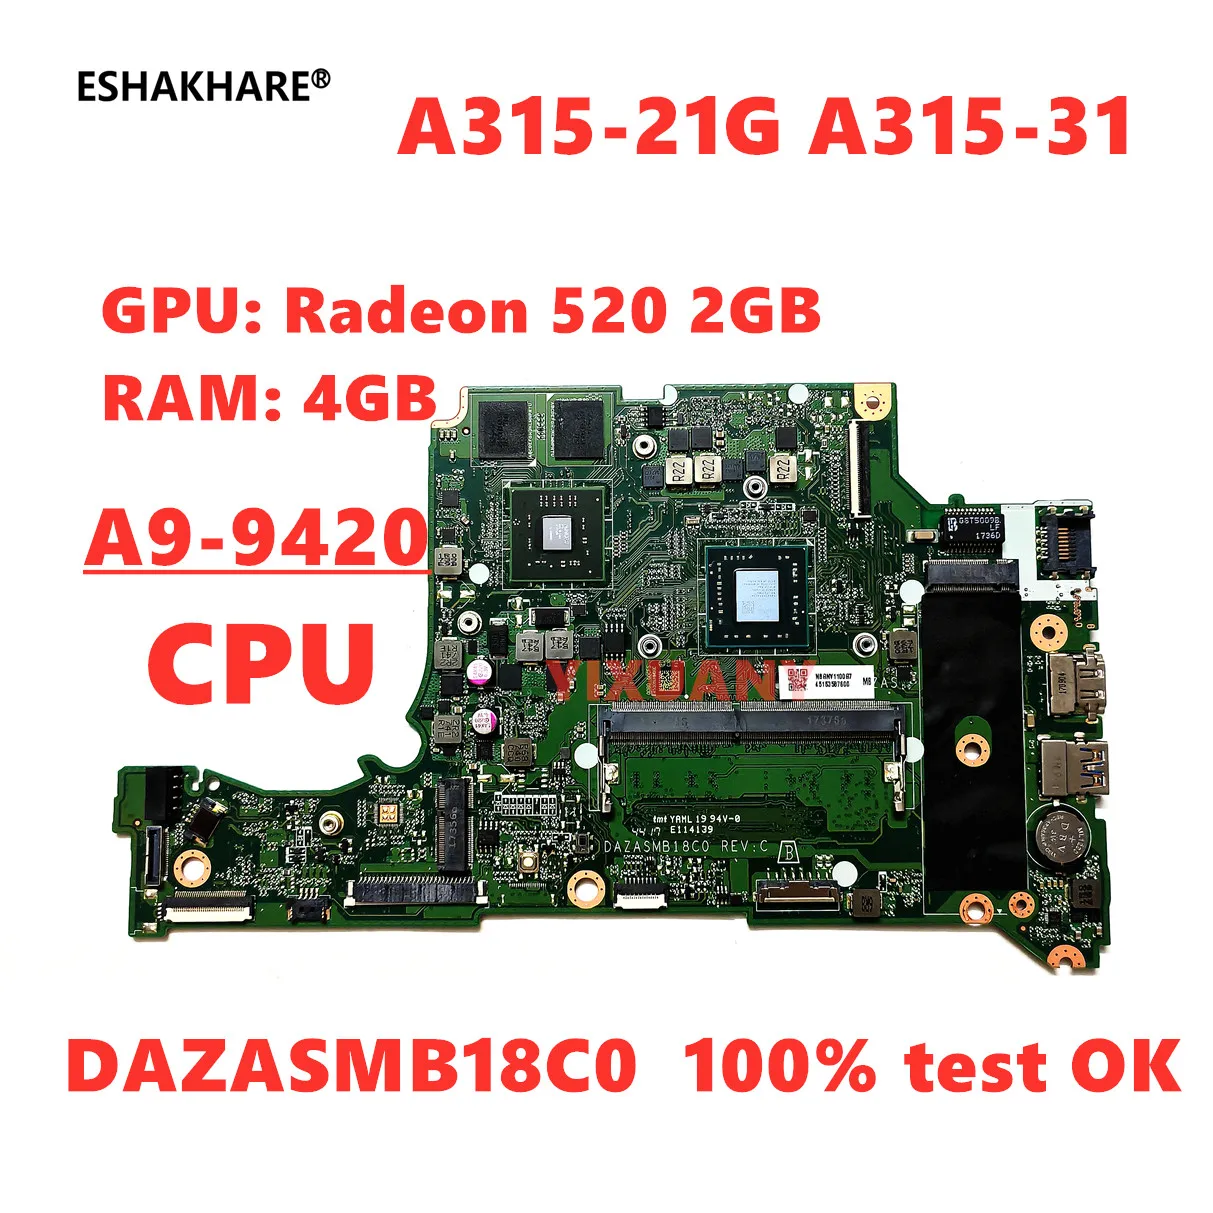 

DAZASMB18C0 For Acer Aspire A315-21G A315-31 Laptop Motherboard with A9-9420 CPU GPU: Radeon 520 2GB RAM: 4GB 100% Test OK